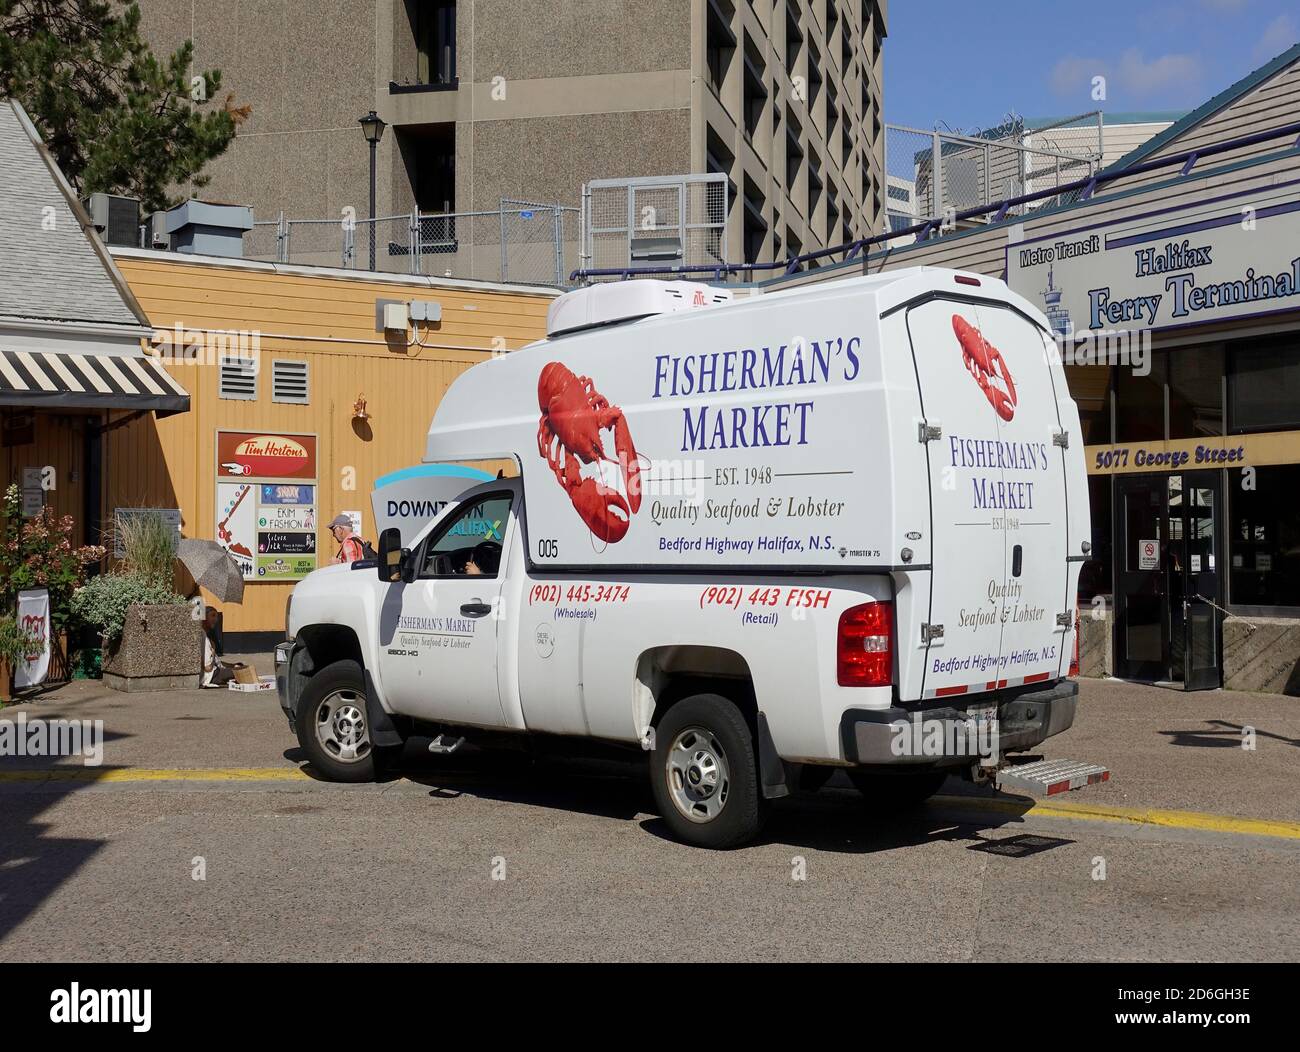 Fisherman's Market Fresh Fish Seafood Delivery Truck in der Innenstadt geparkt Halifax Nova Scotia Kanada Stockfoto